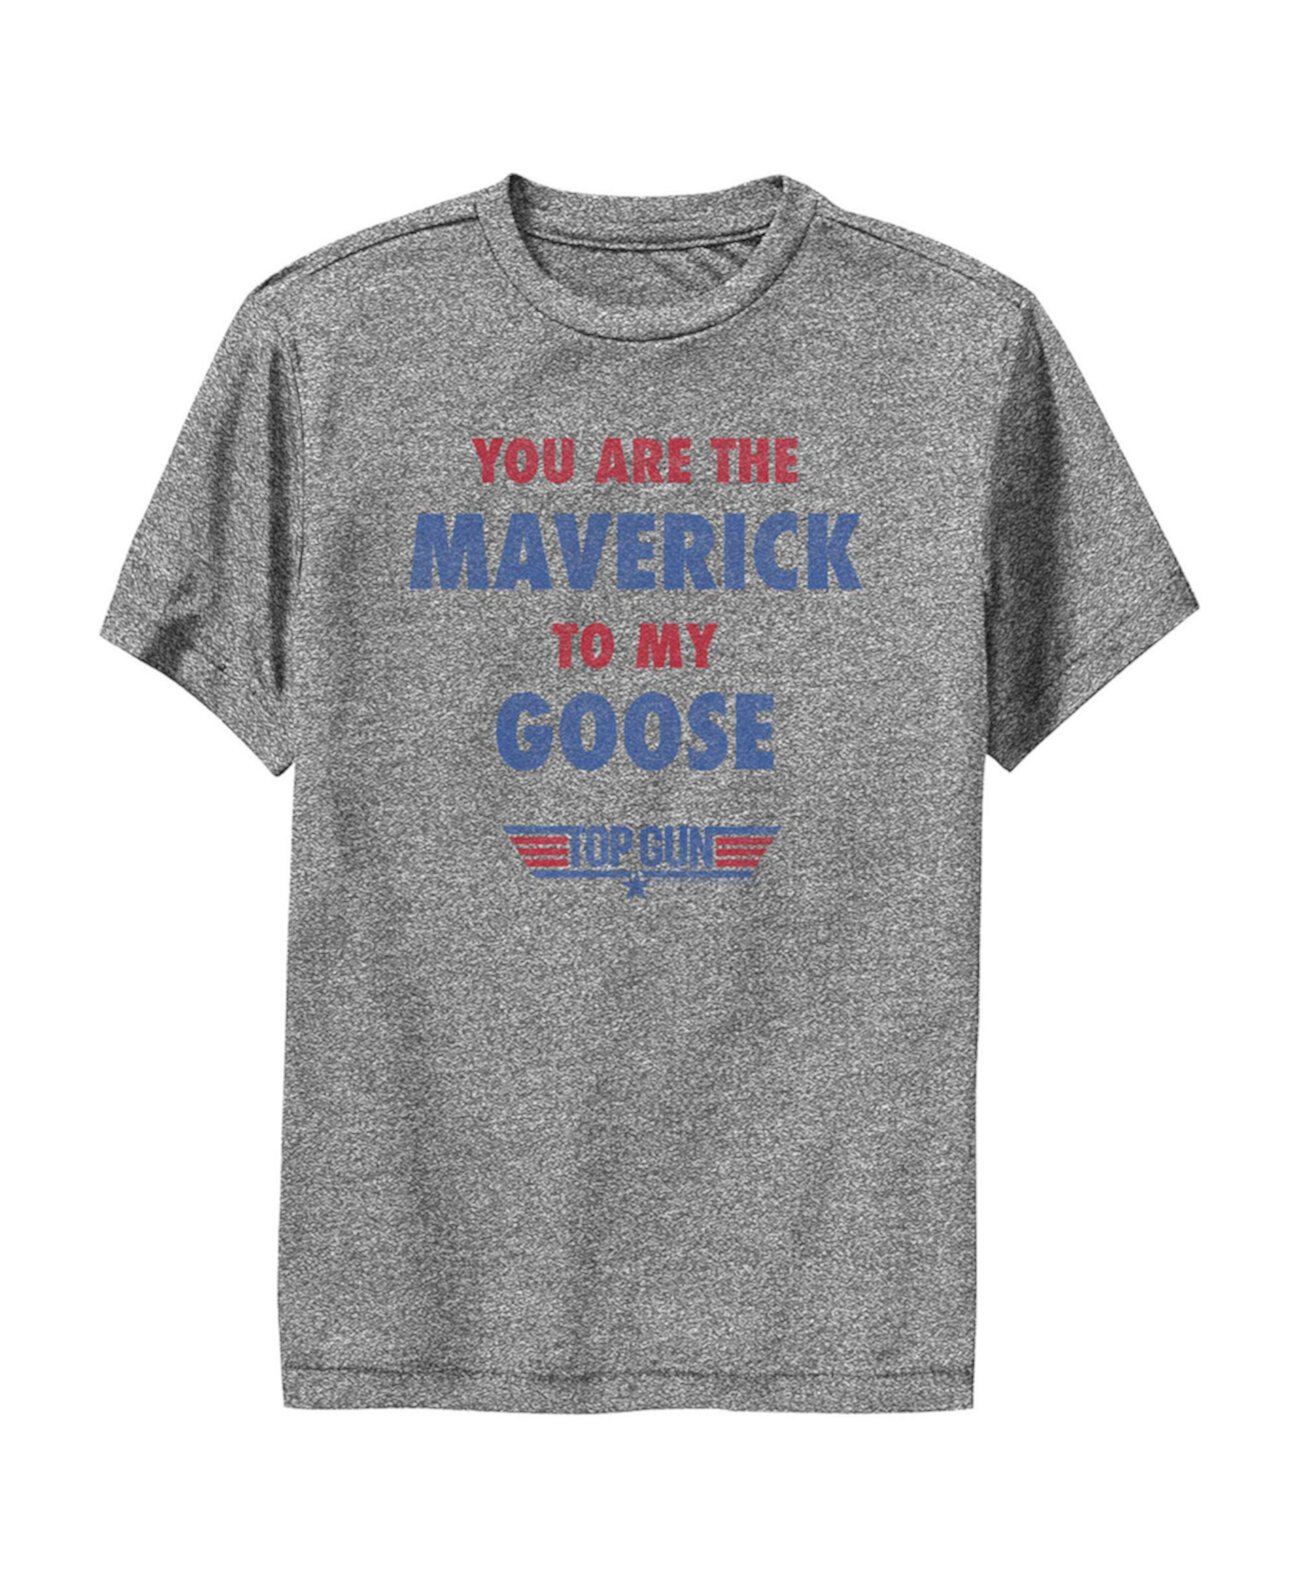 Футболка для мальчиков «You Are the Maverick to My Goose Child» Paramount